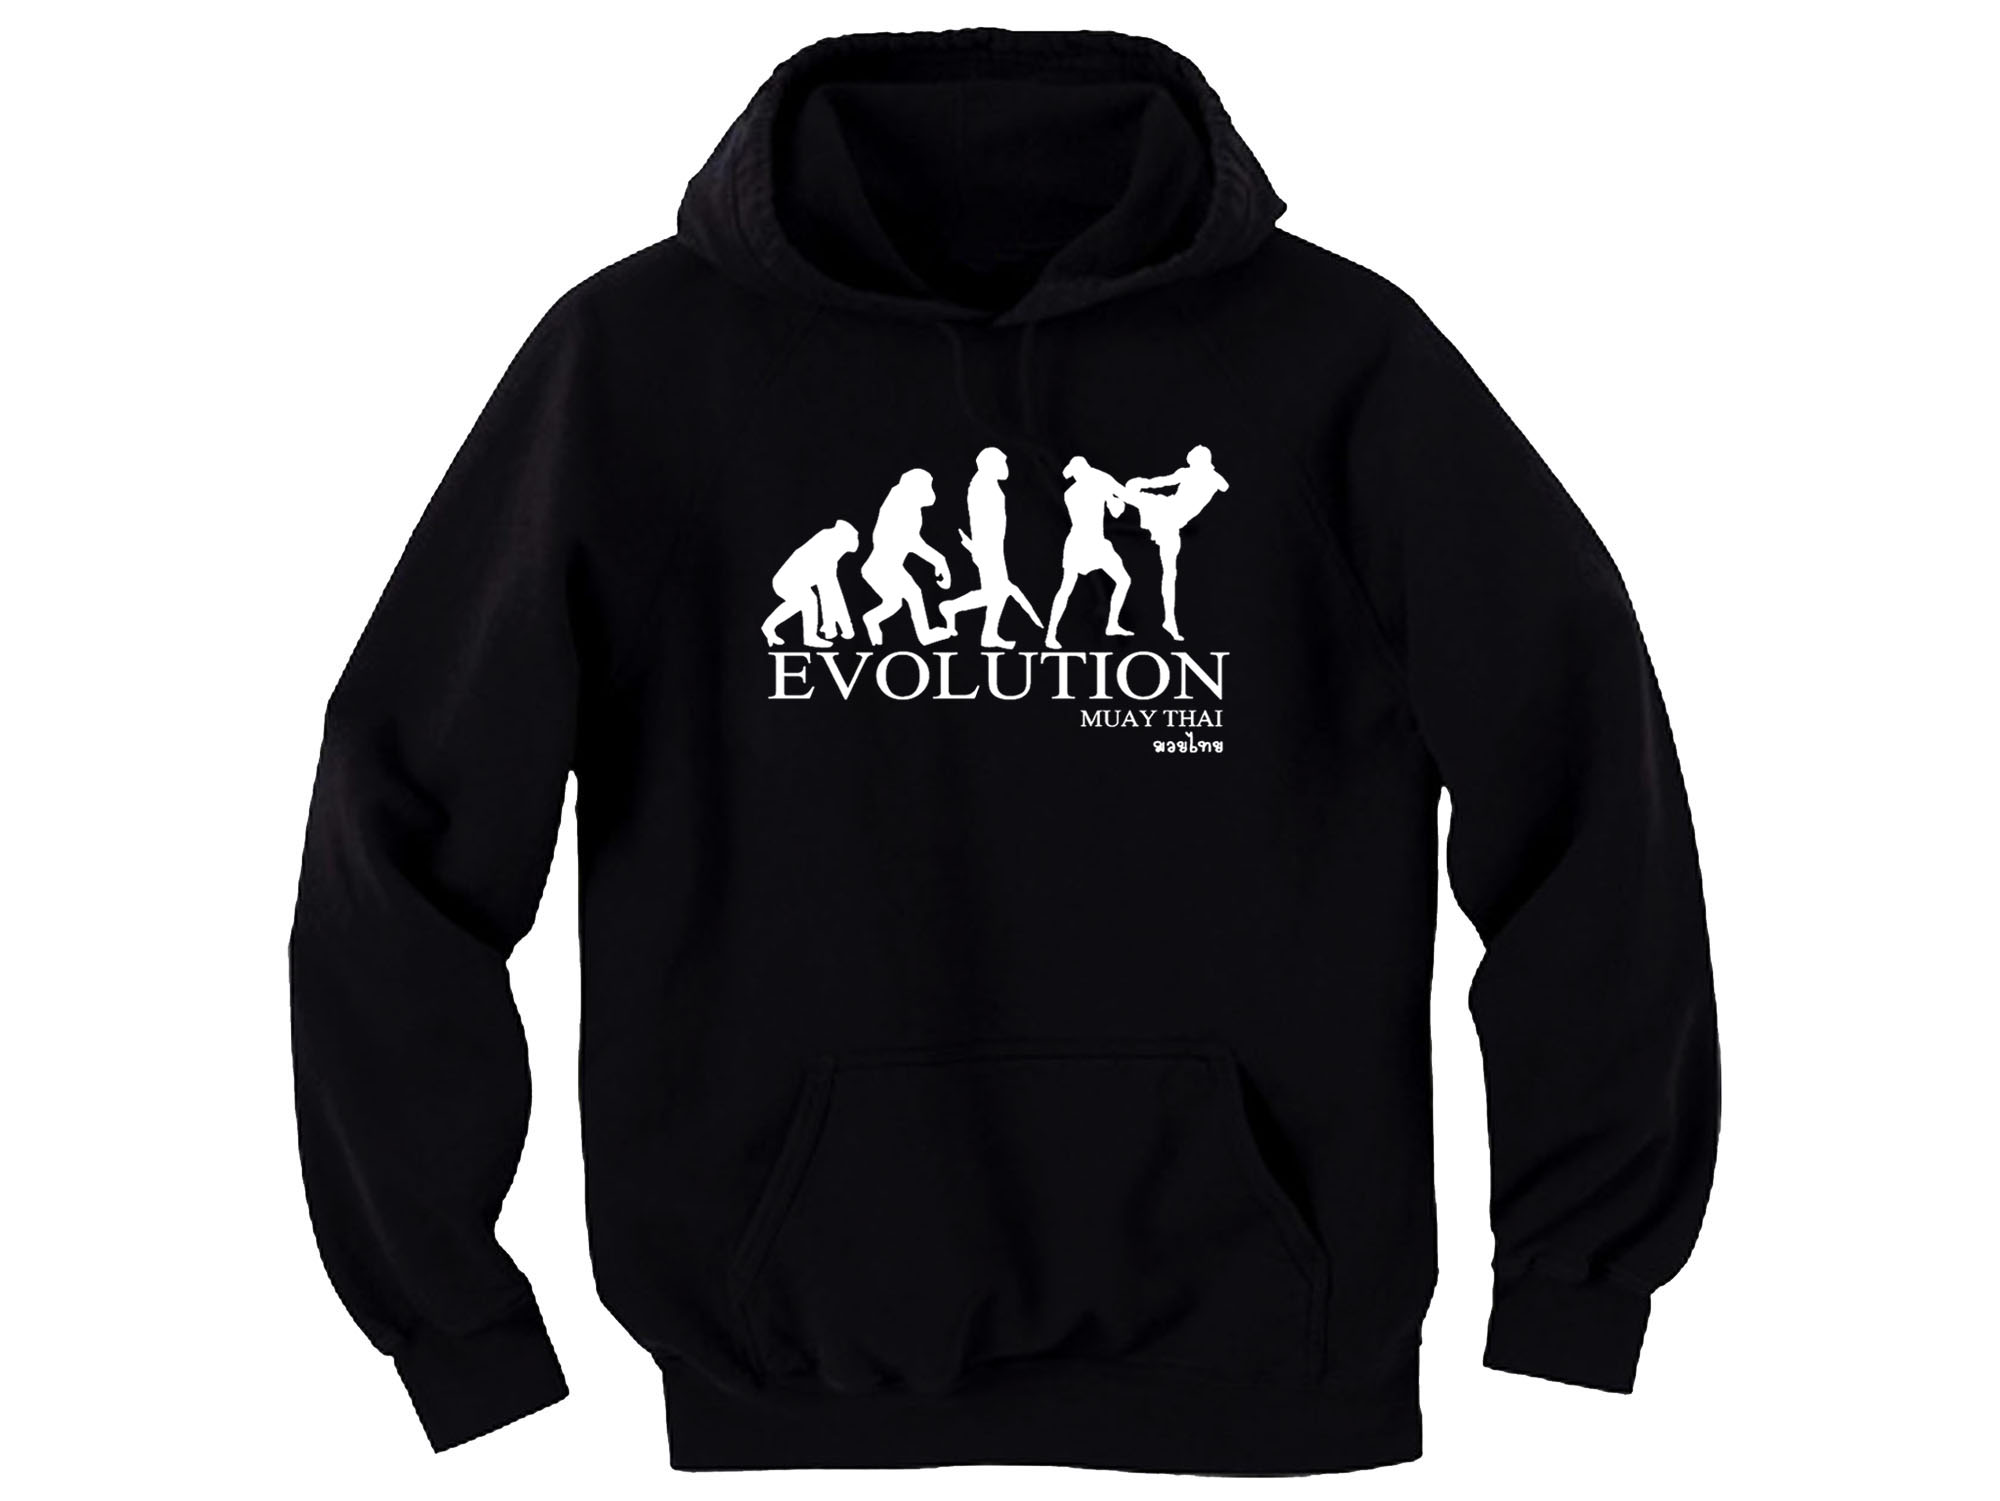 Muay Thai boxing Evolution graphic hooded sweatshirt